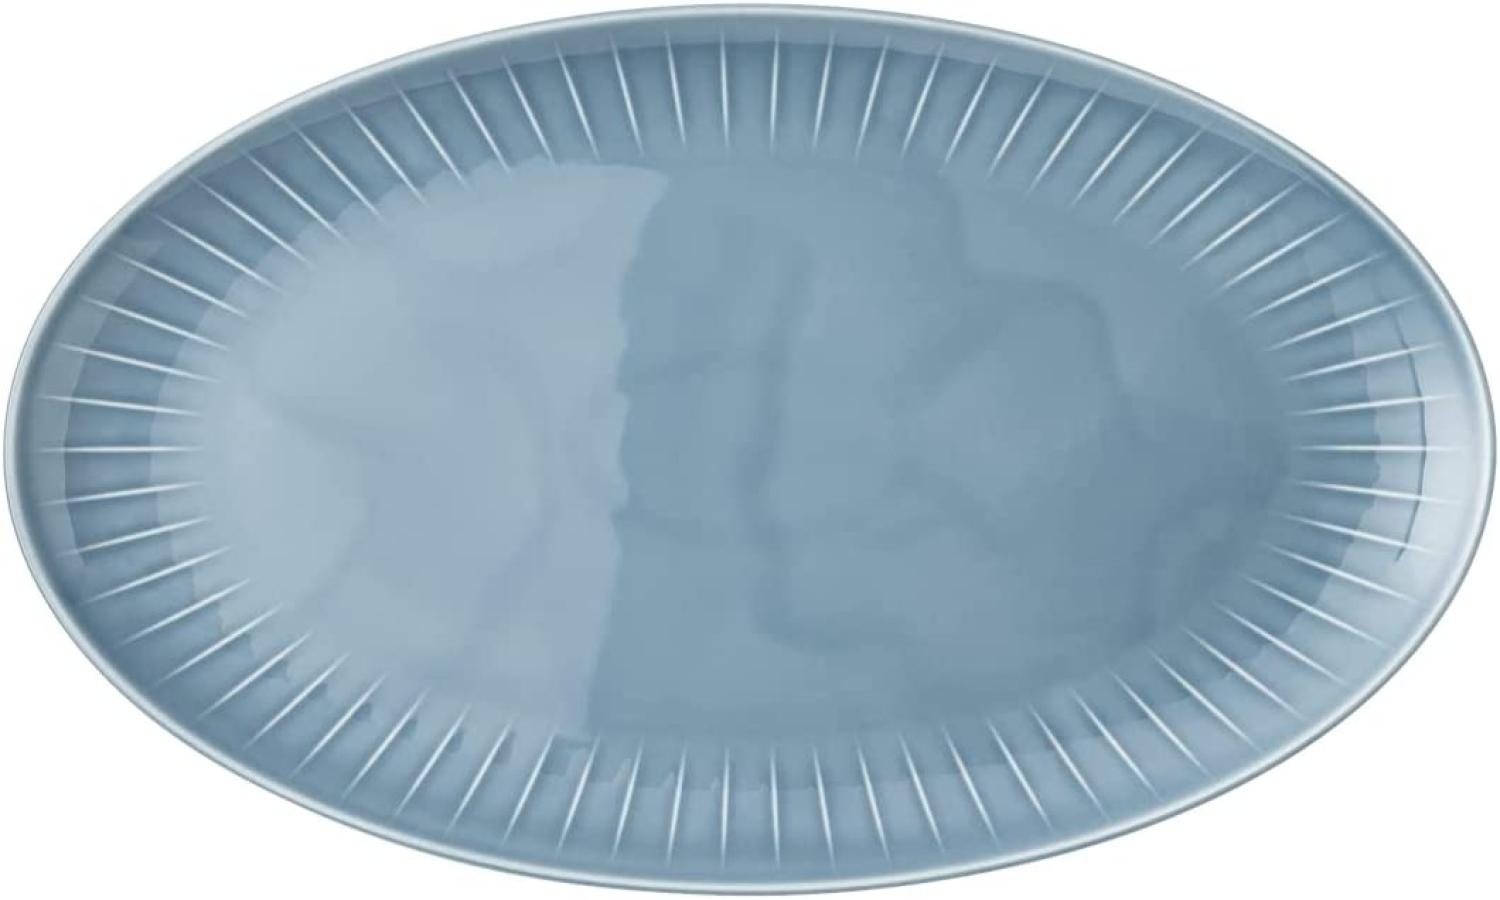 Arzberg Platte Joyn Denim Blue, Servierplatte, Porzellan, Blau, 38 cm, 44020-640211-12738 Bild 1